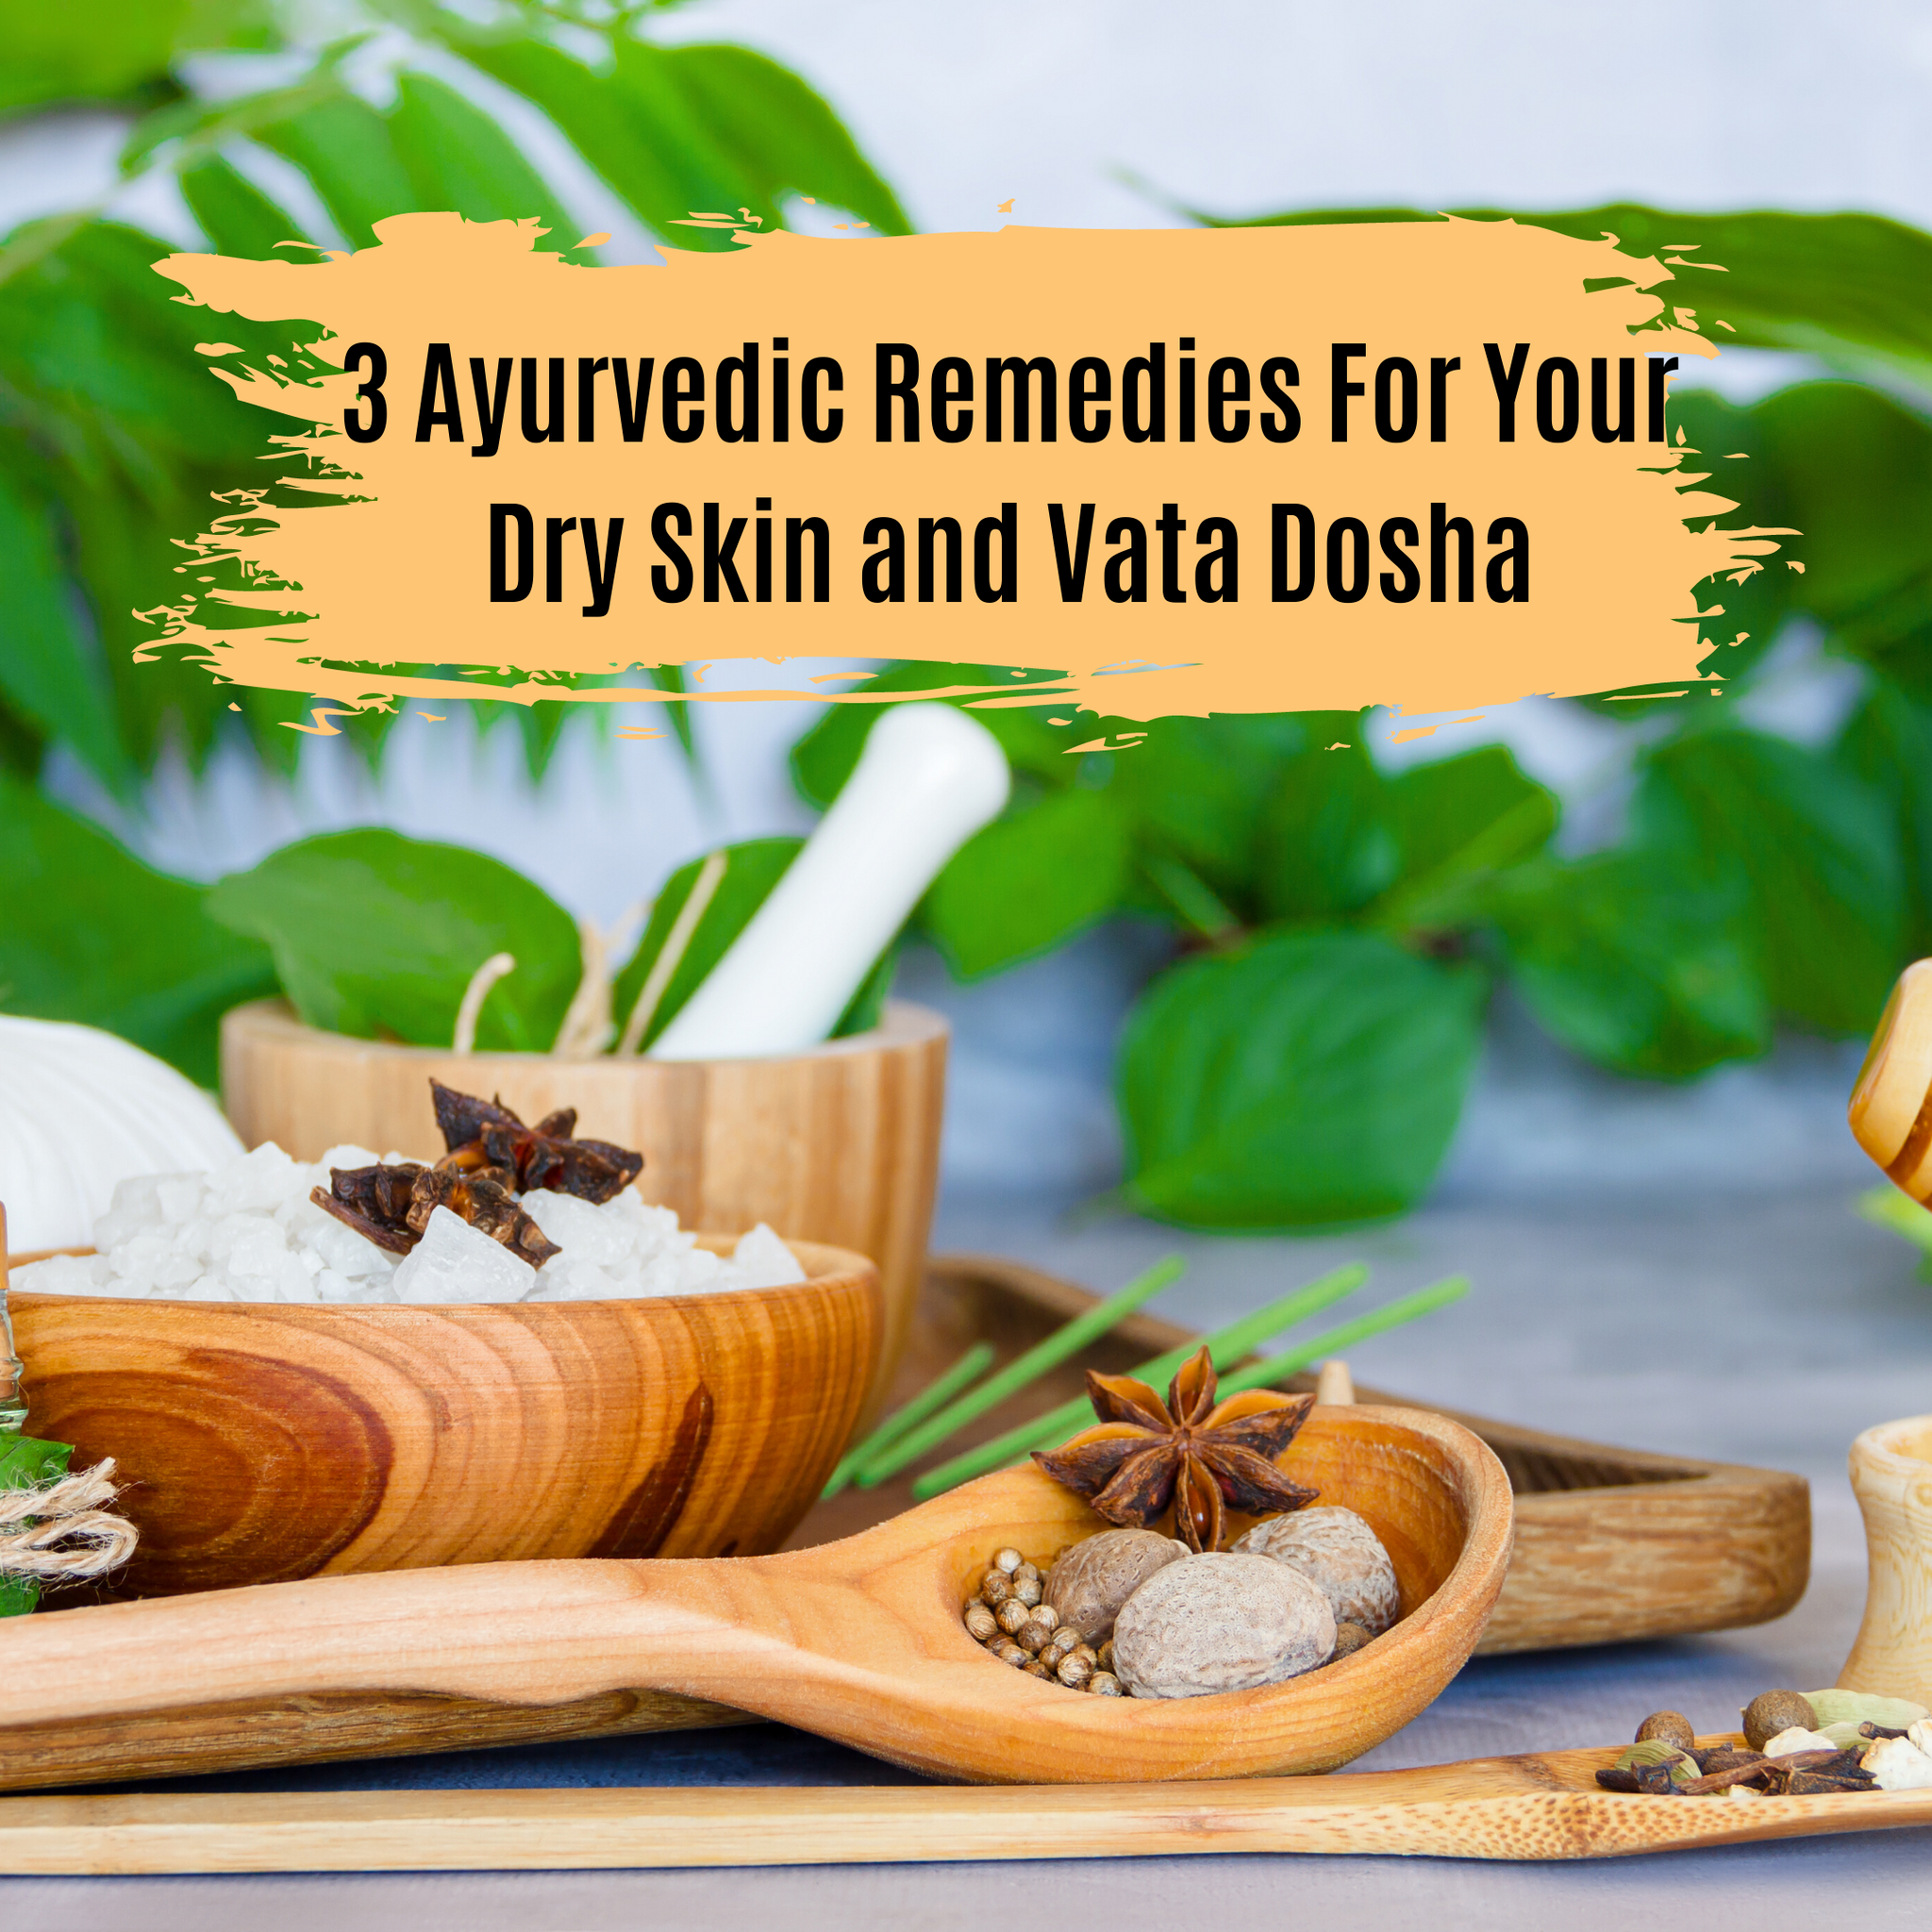 3 Ayurvedic Remedies For Your Dry Skin and Vata Dosha